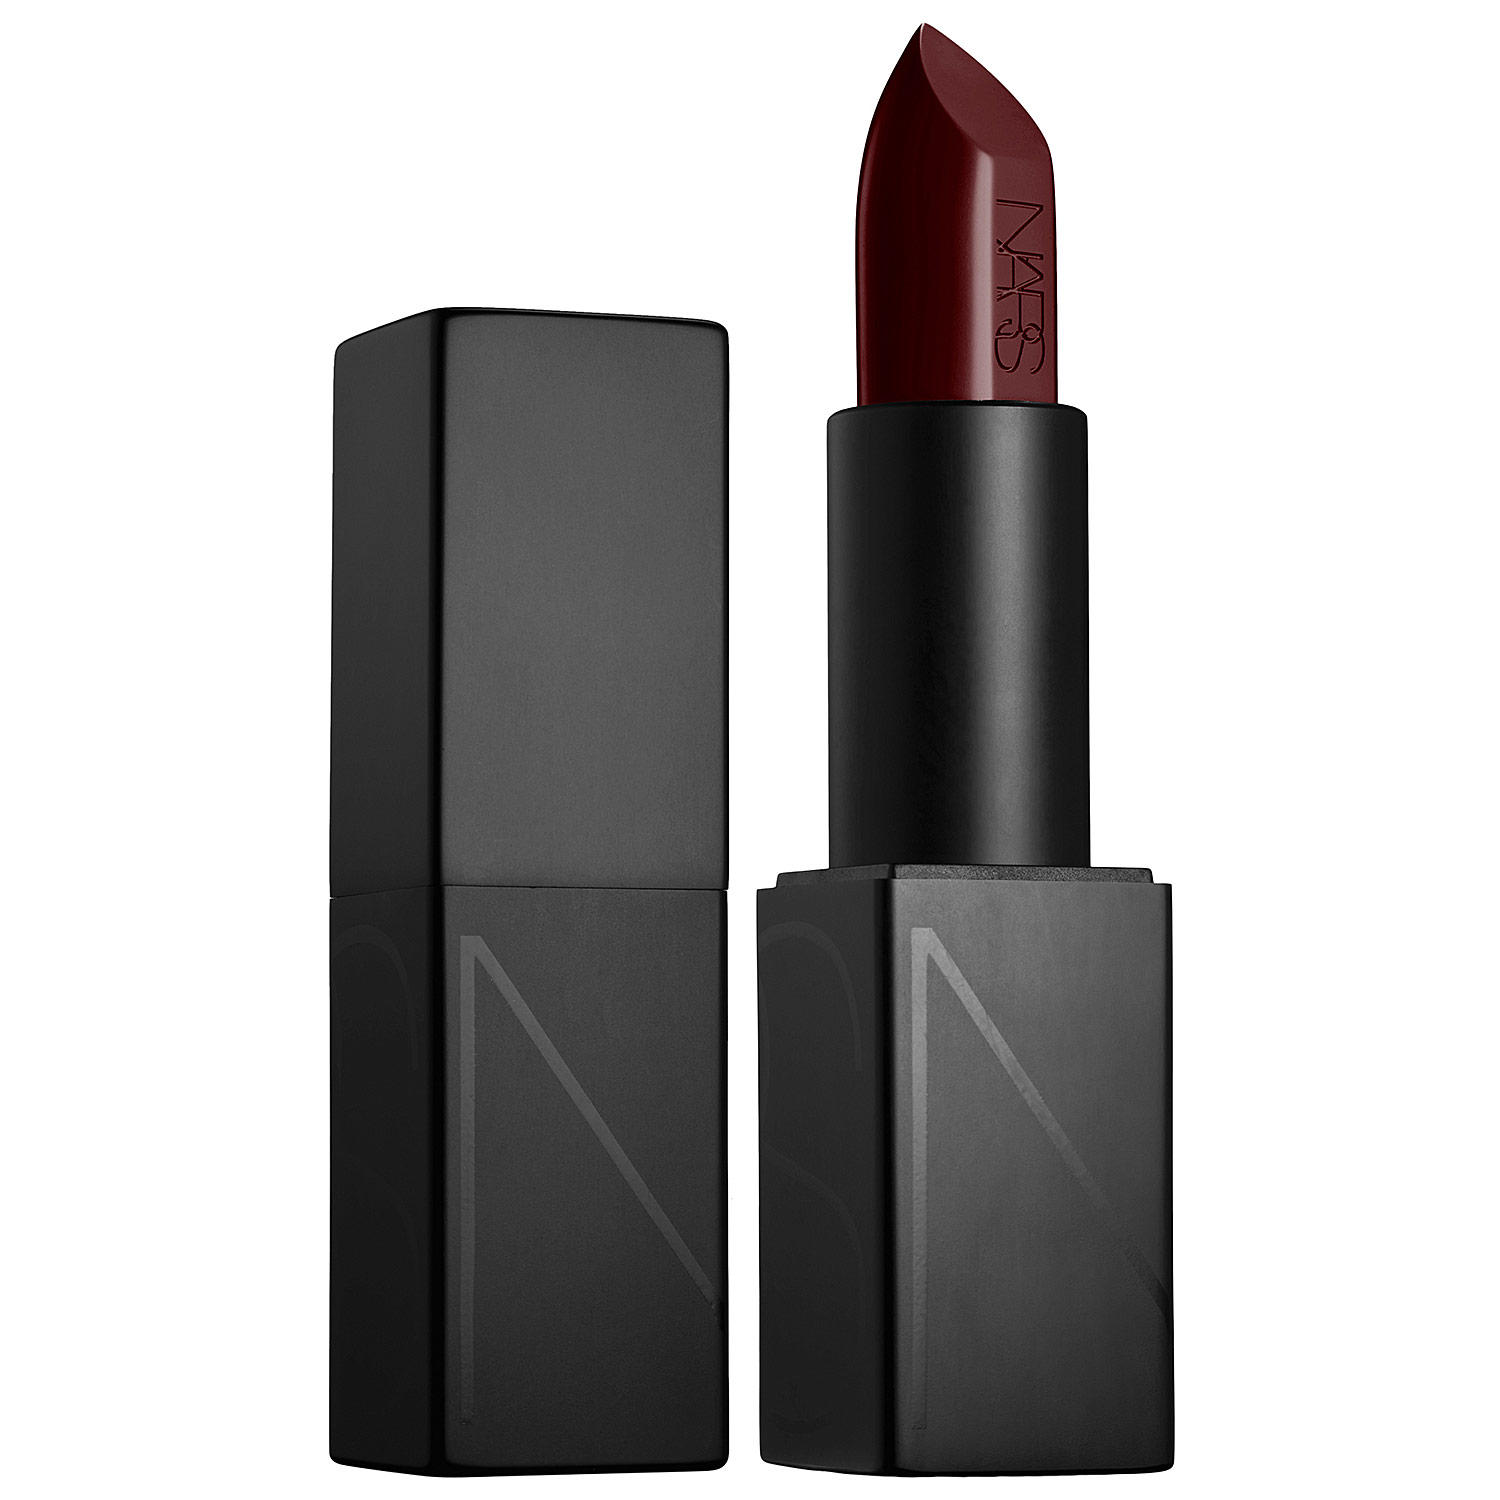 NARS Audacious Lipstick Bette | Glambot.com - Best deals on NARS cosmetics